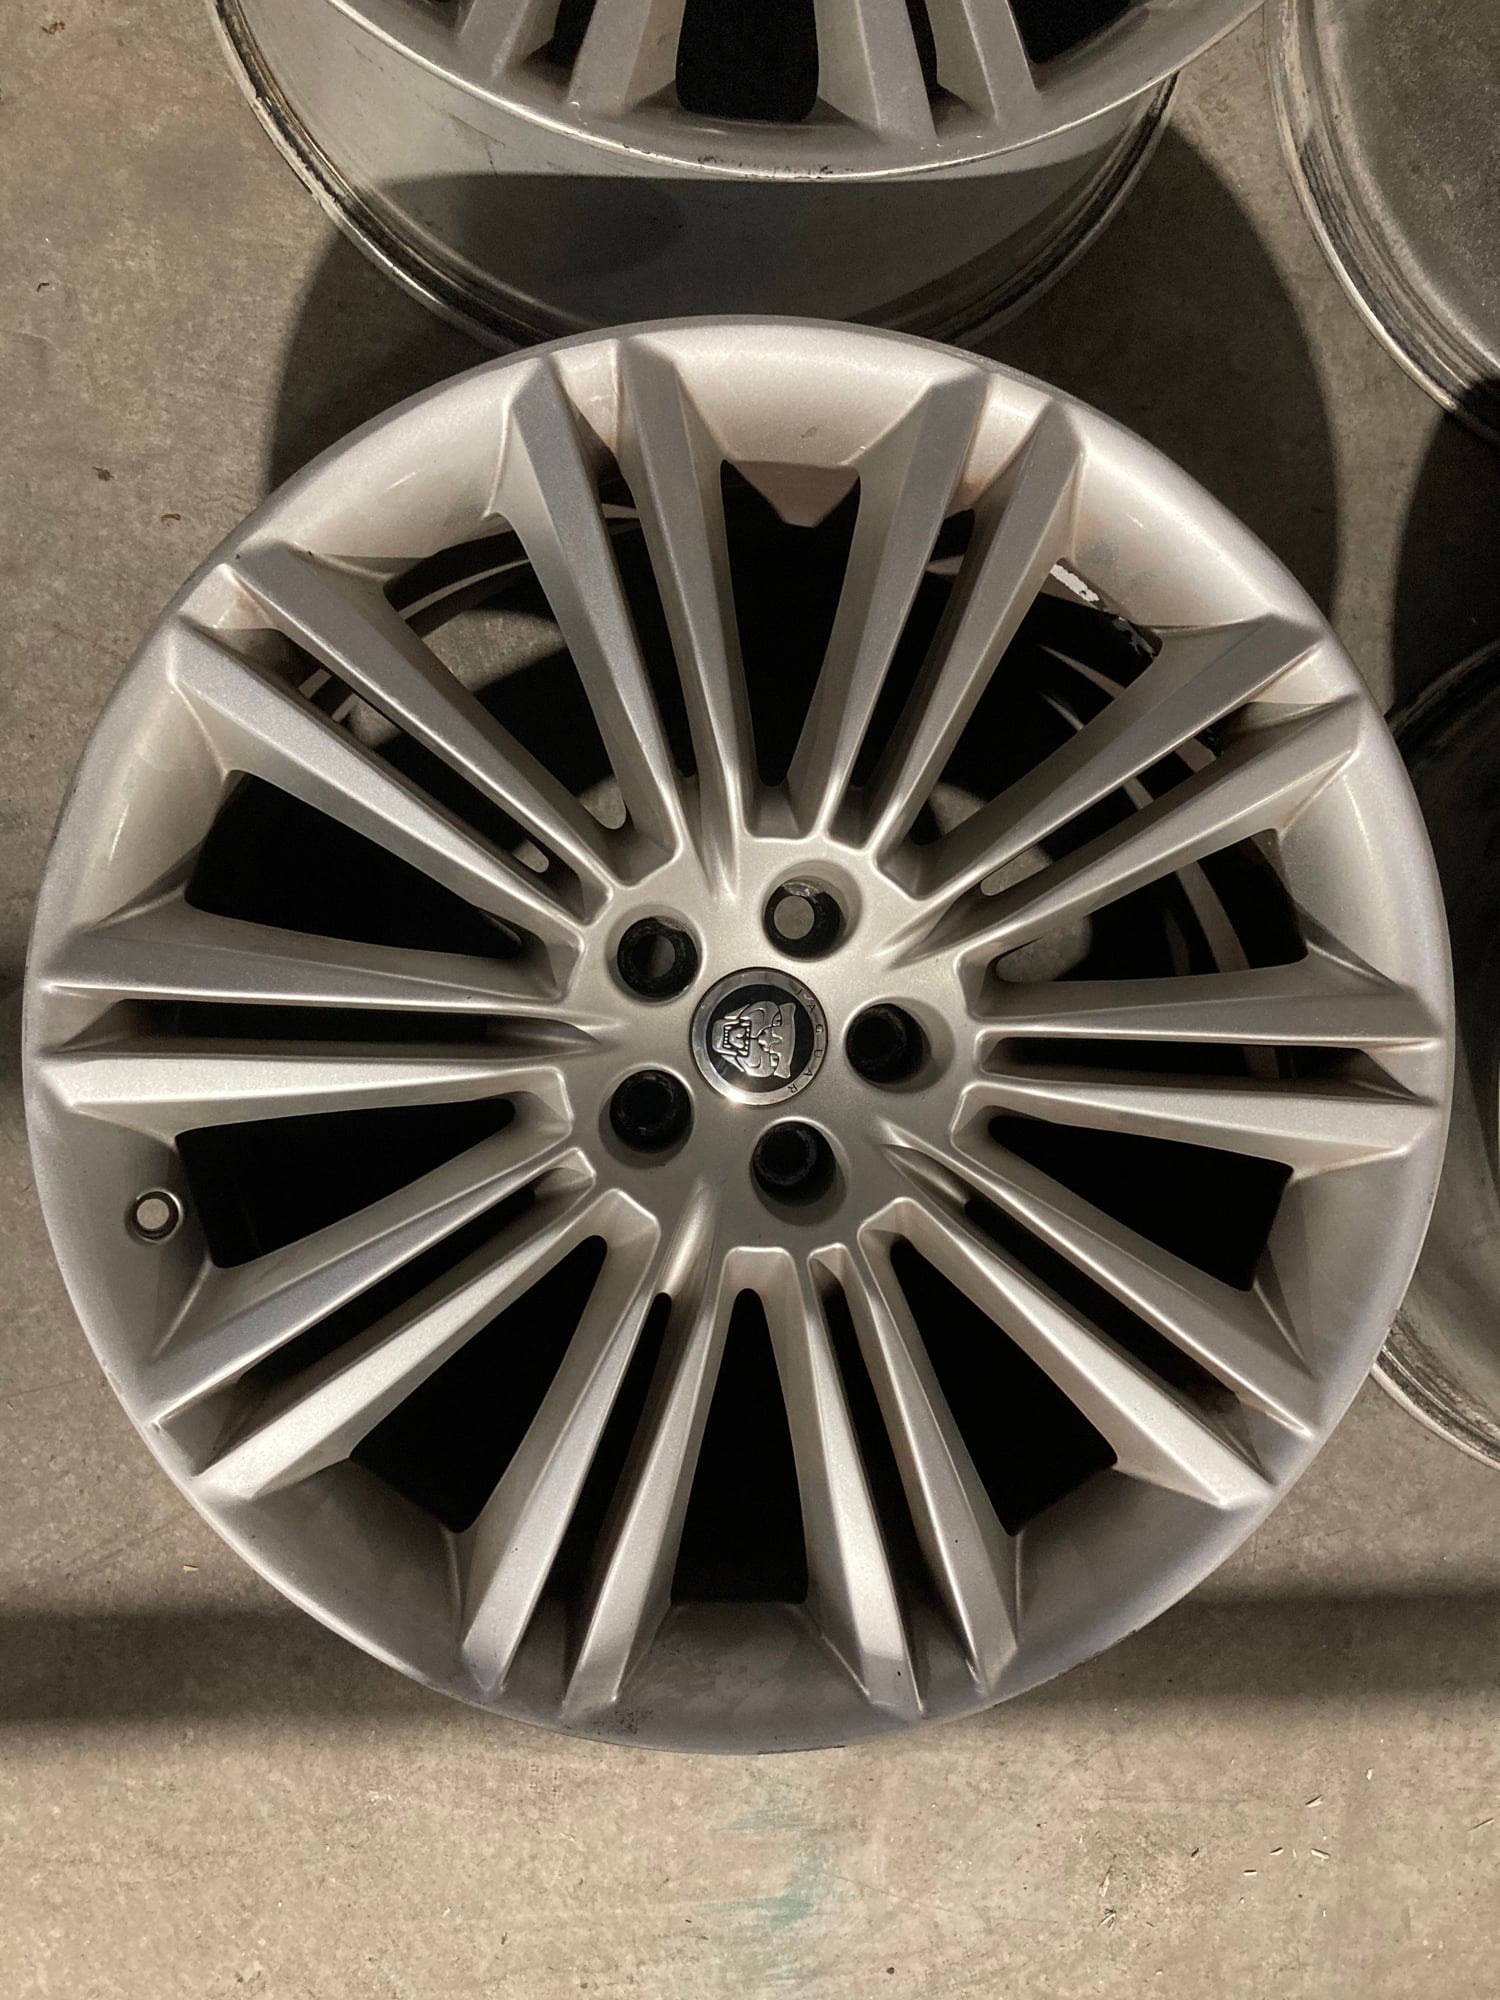 Wheels and Tires/Axles - Jaguar OEM Kasuga Wheels - Used - 2010 to 2019 Jaguar XJ - Austin, TX 78719, United States